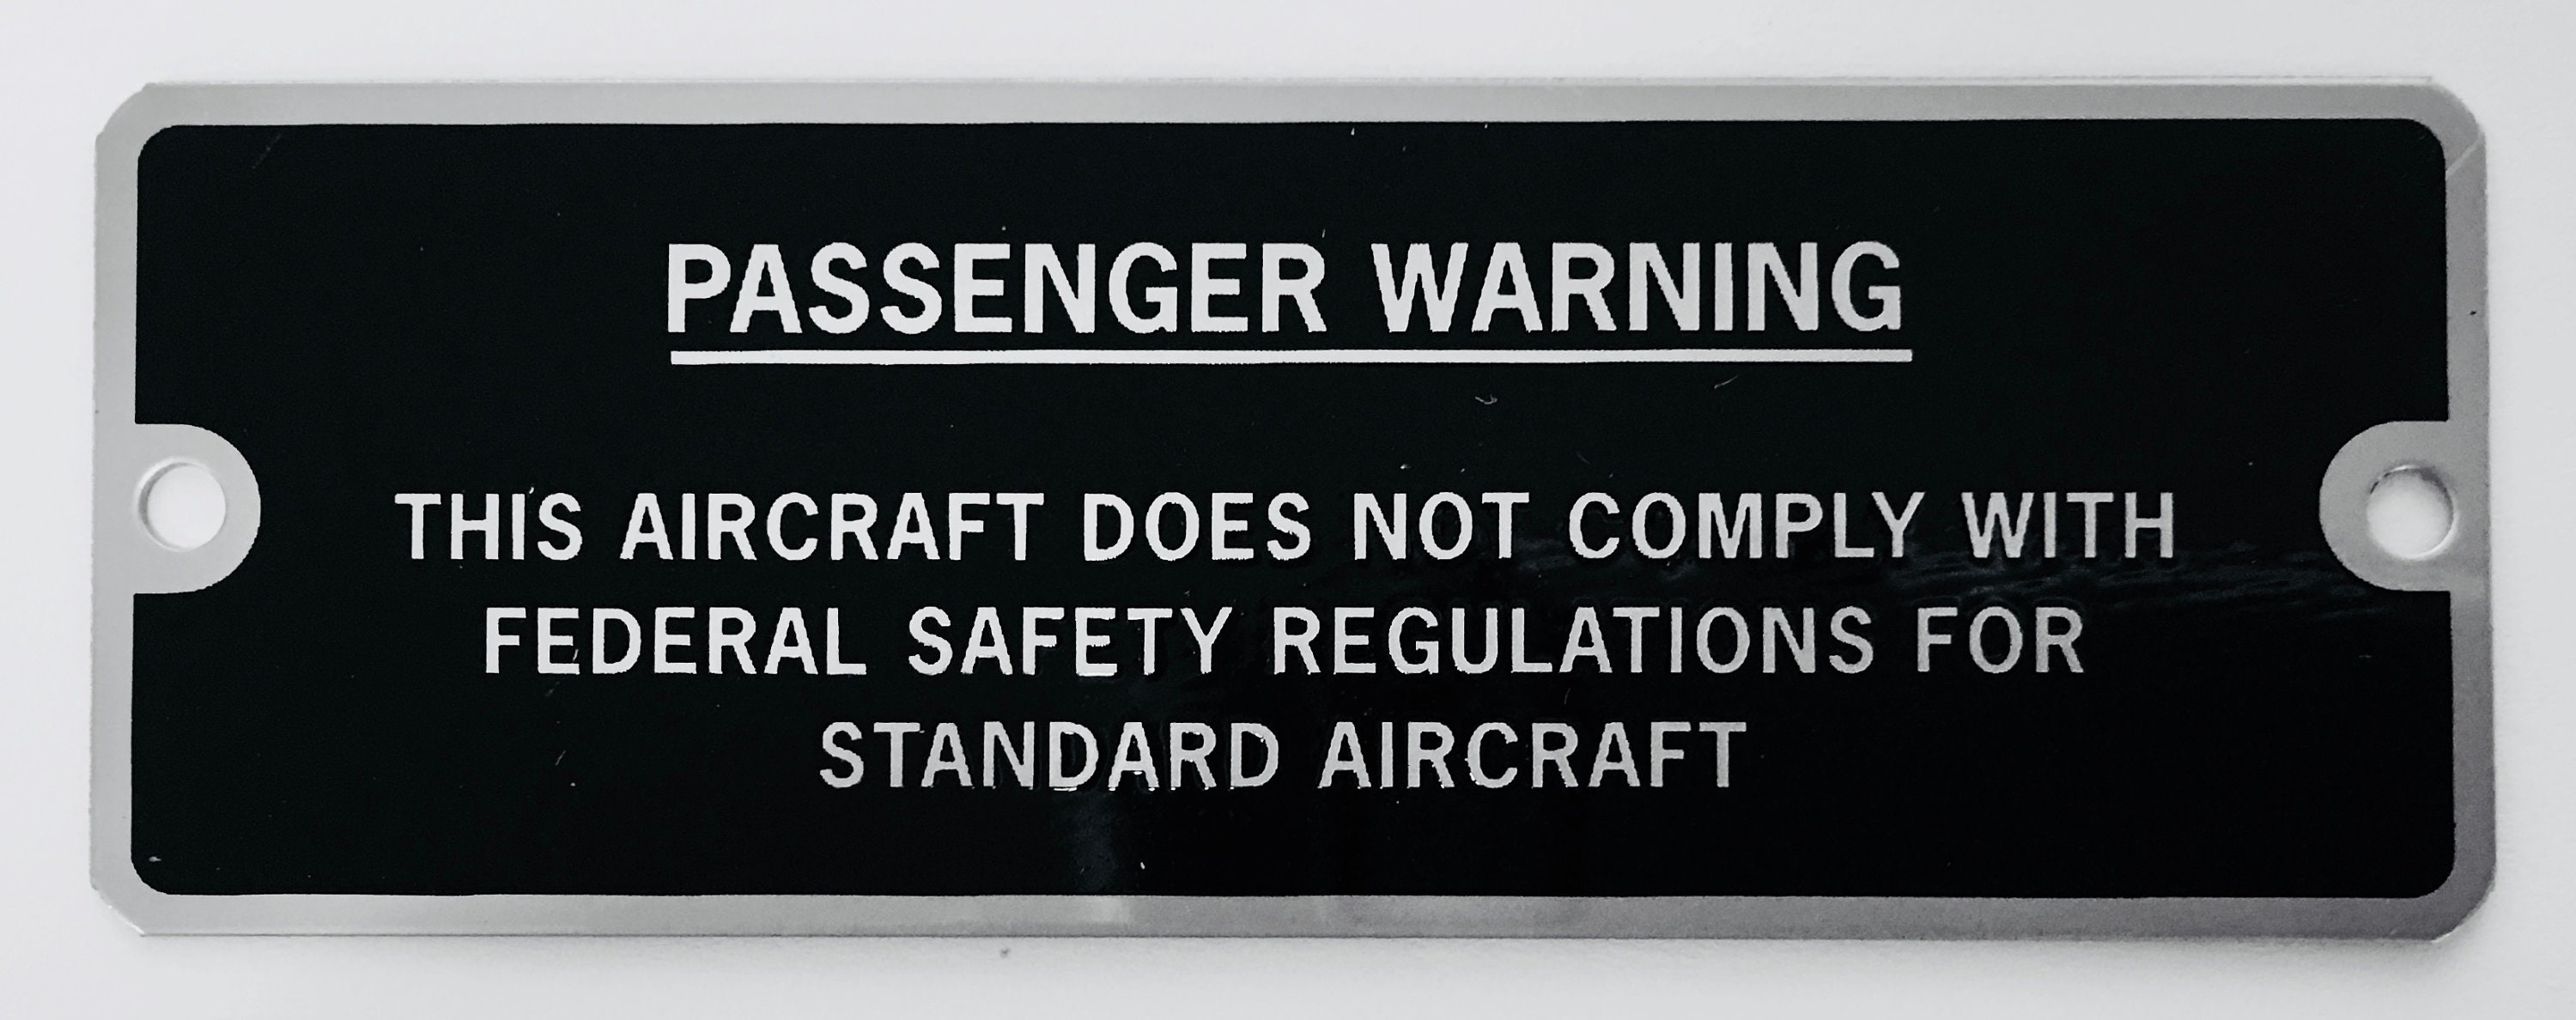 Amateur-built Passenger Warning Experimental Aircraft Placard pic